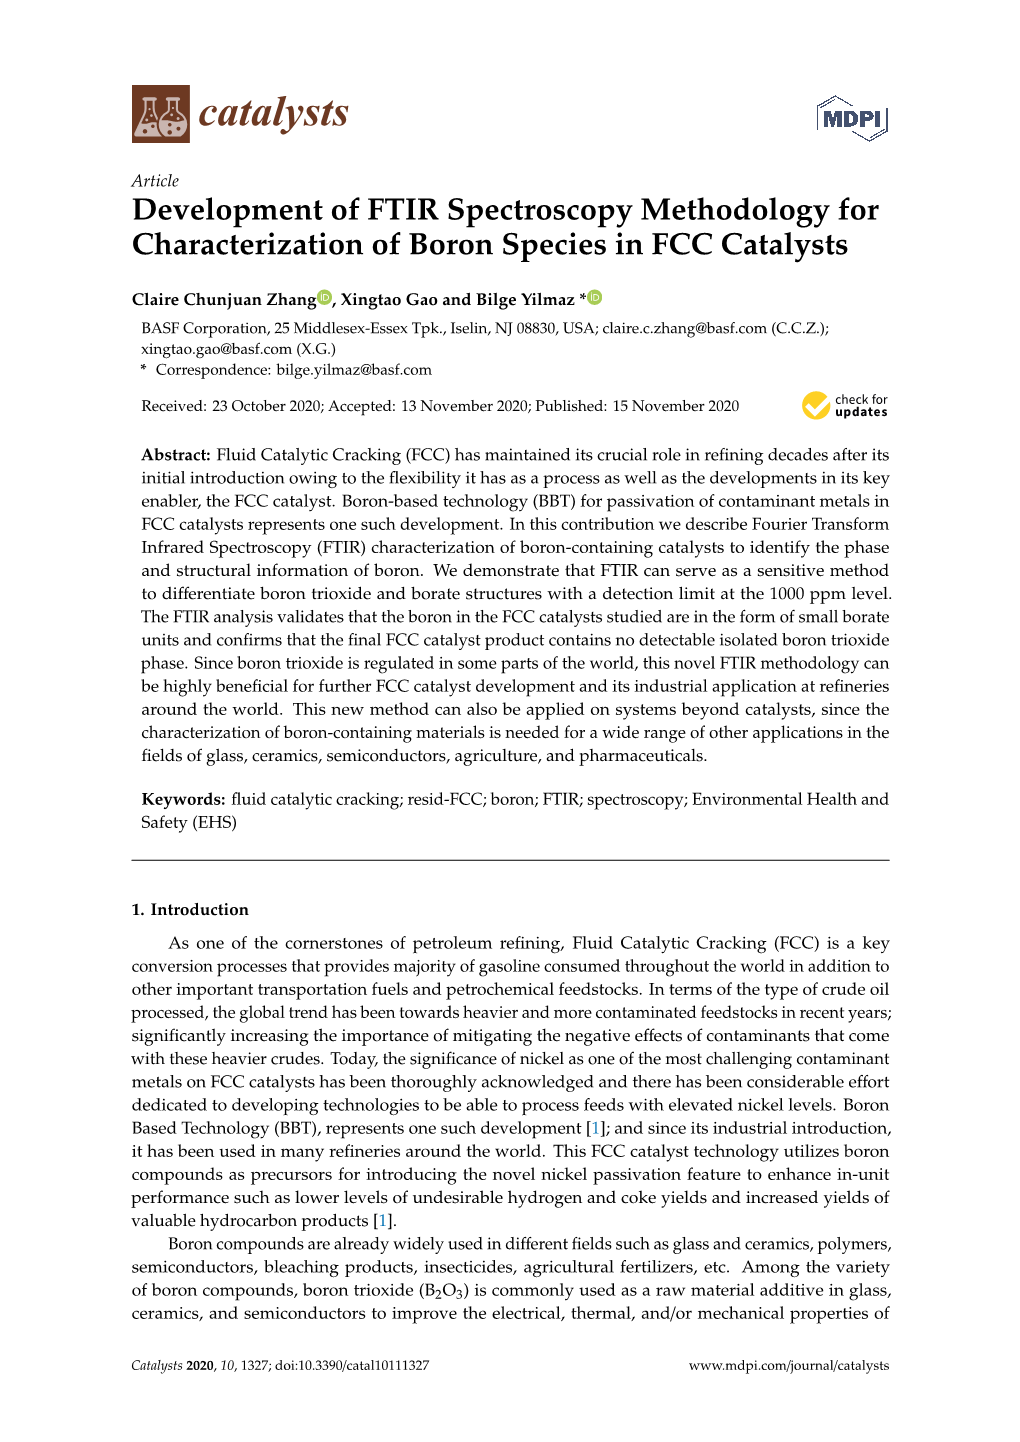 Development of FTIR Spectroscopy Methodology for Characterization of Boron Species in FCC Catalysts